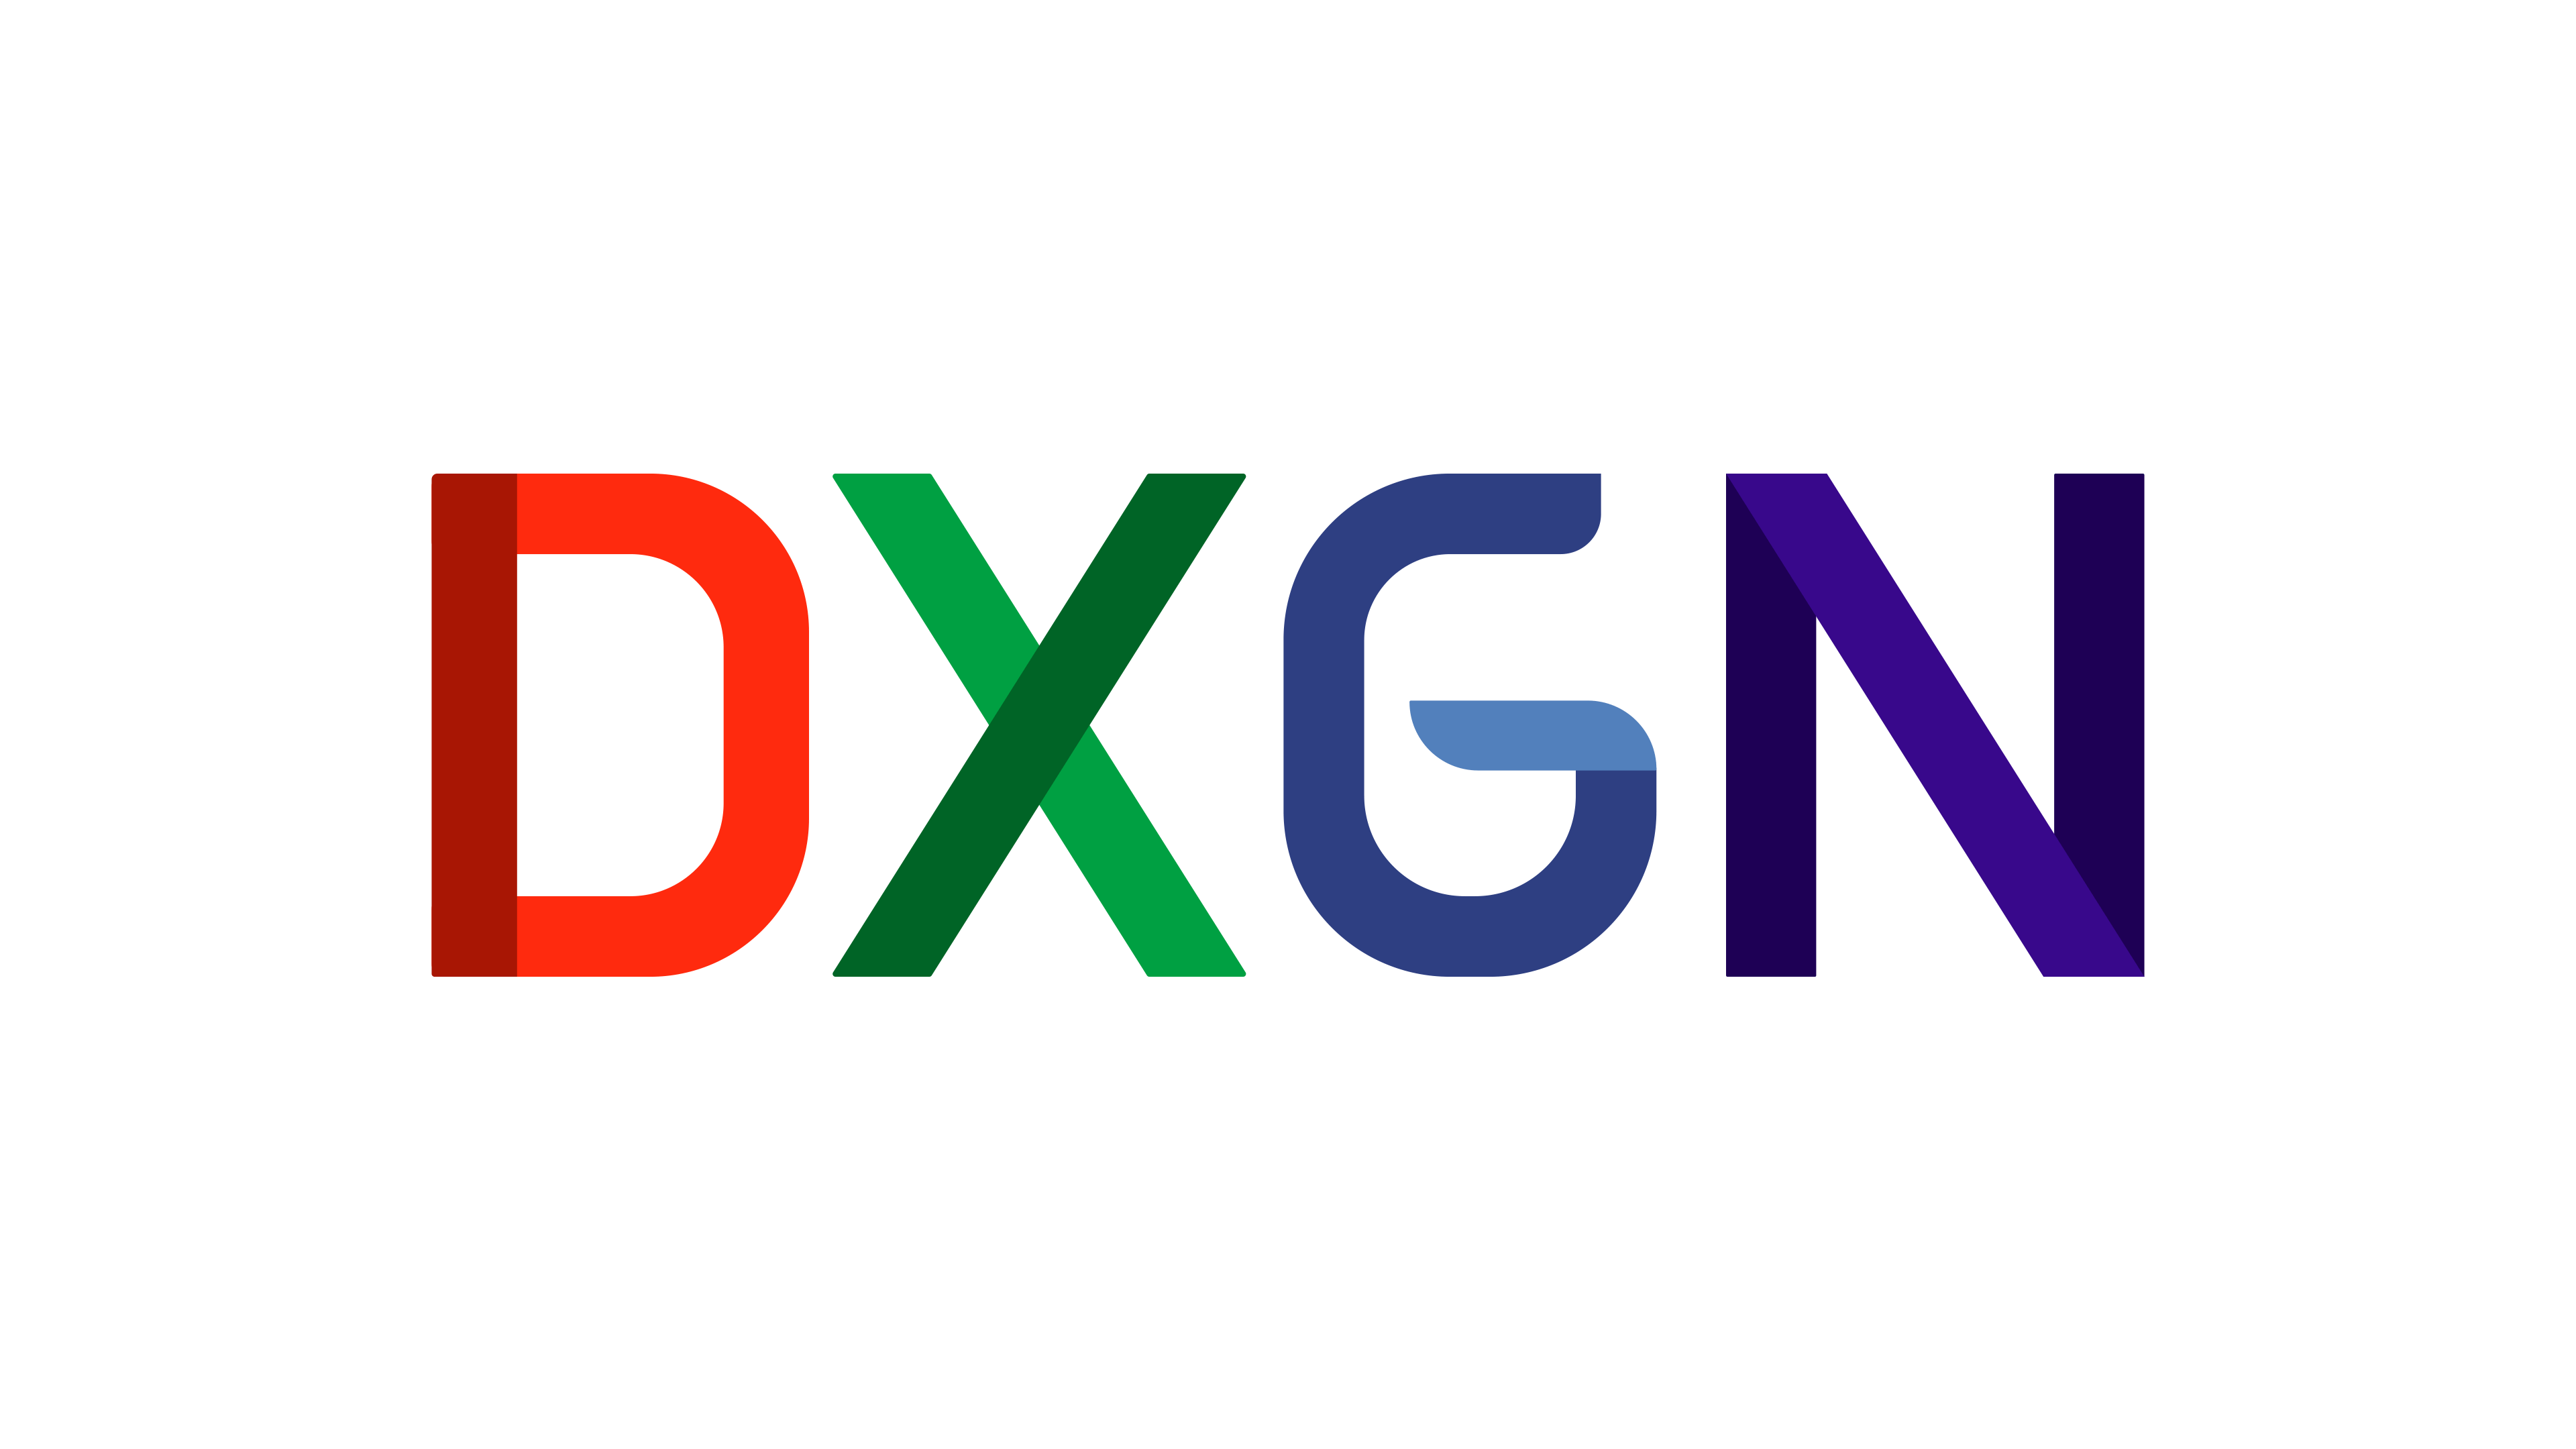 Design Exchange Network